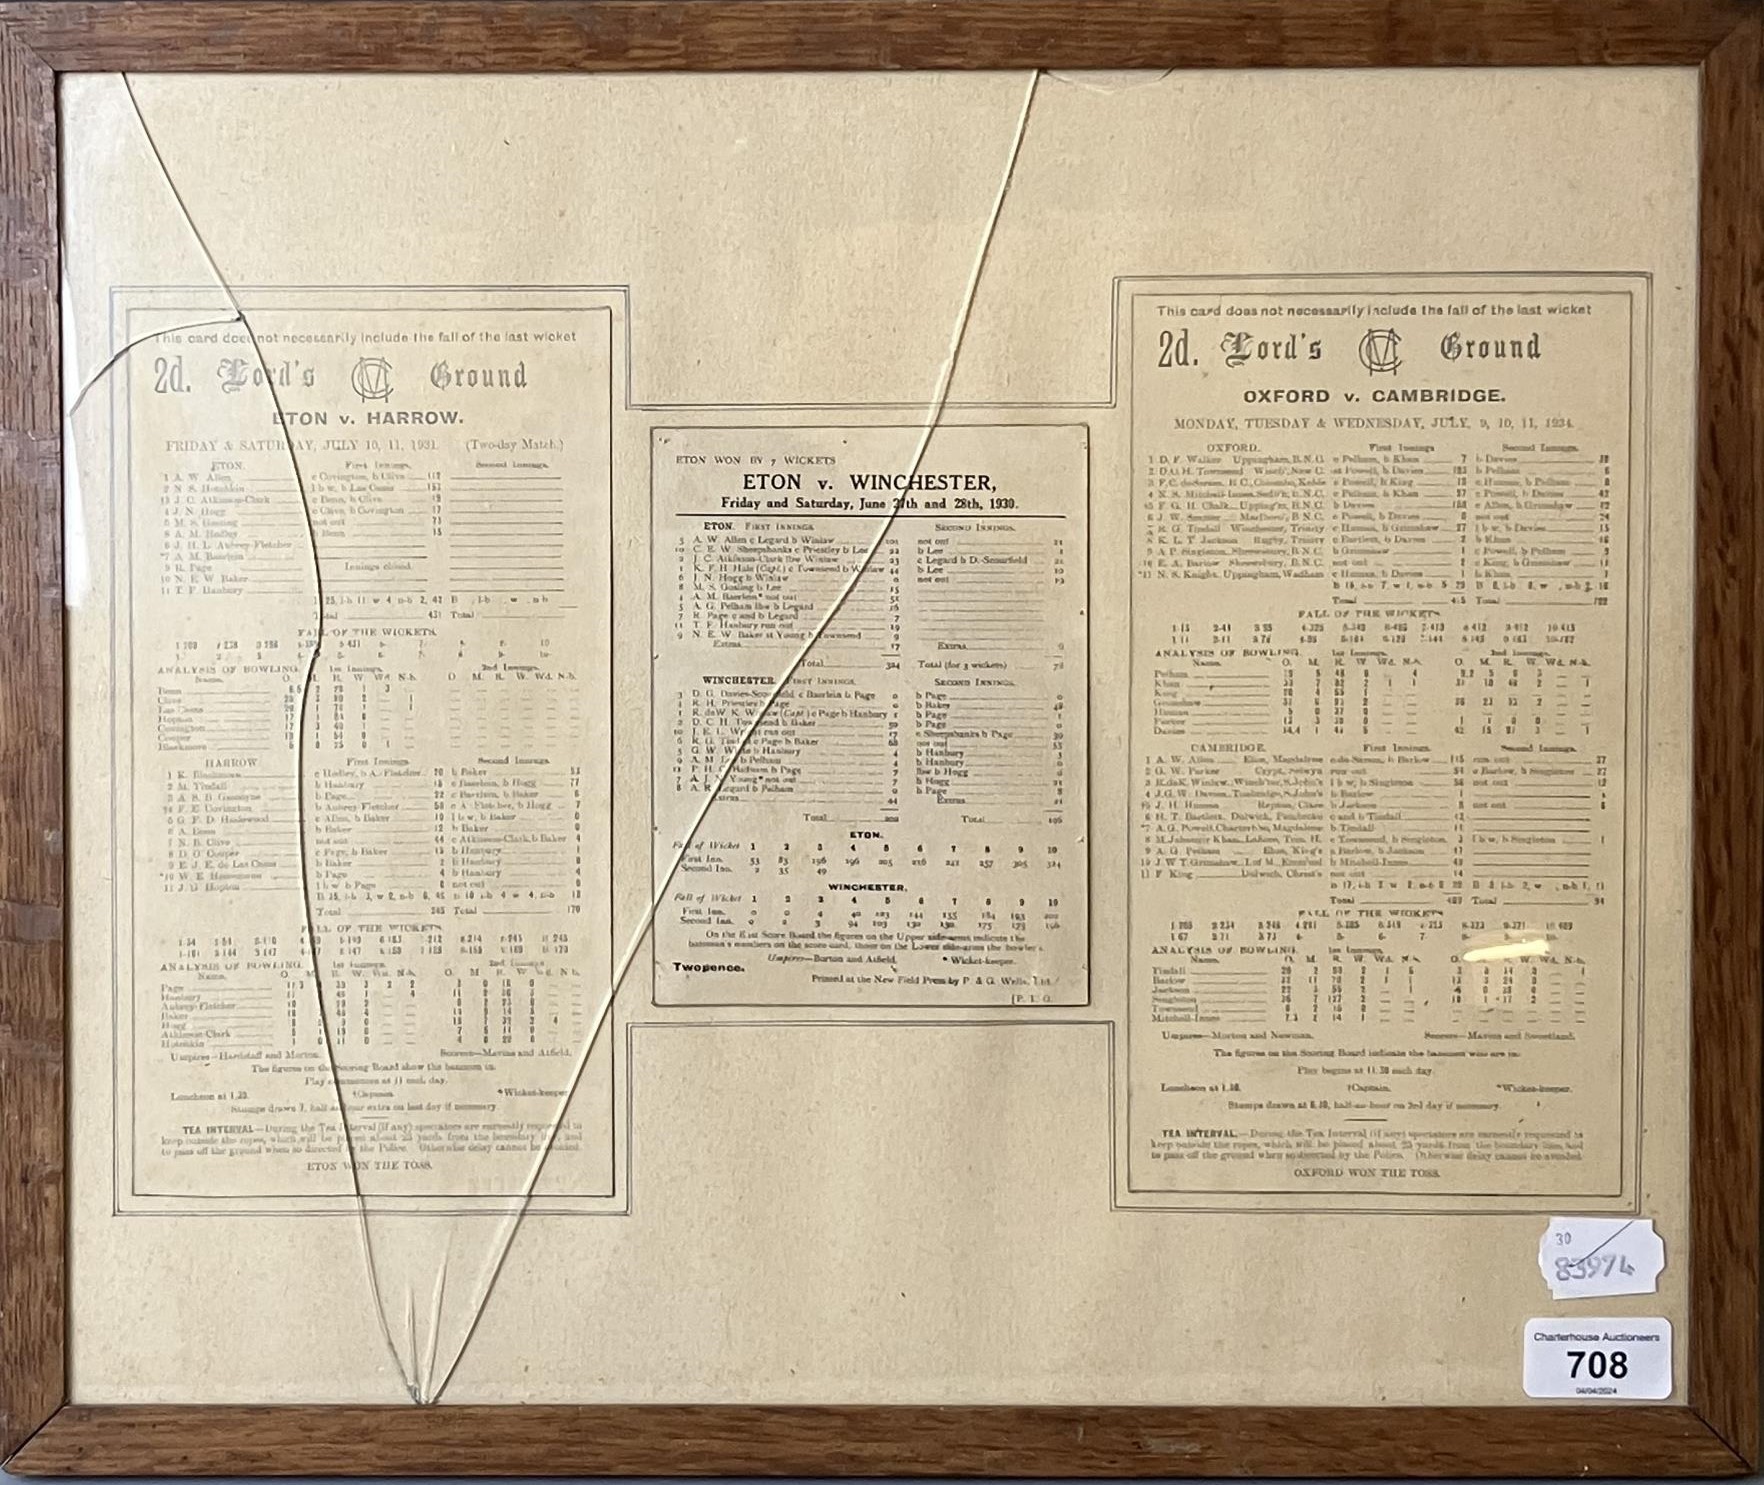 Three sports results cards, Eton v Harrow, Eton v Winchester, and Oxford v Cambridge, framed as